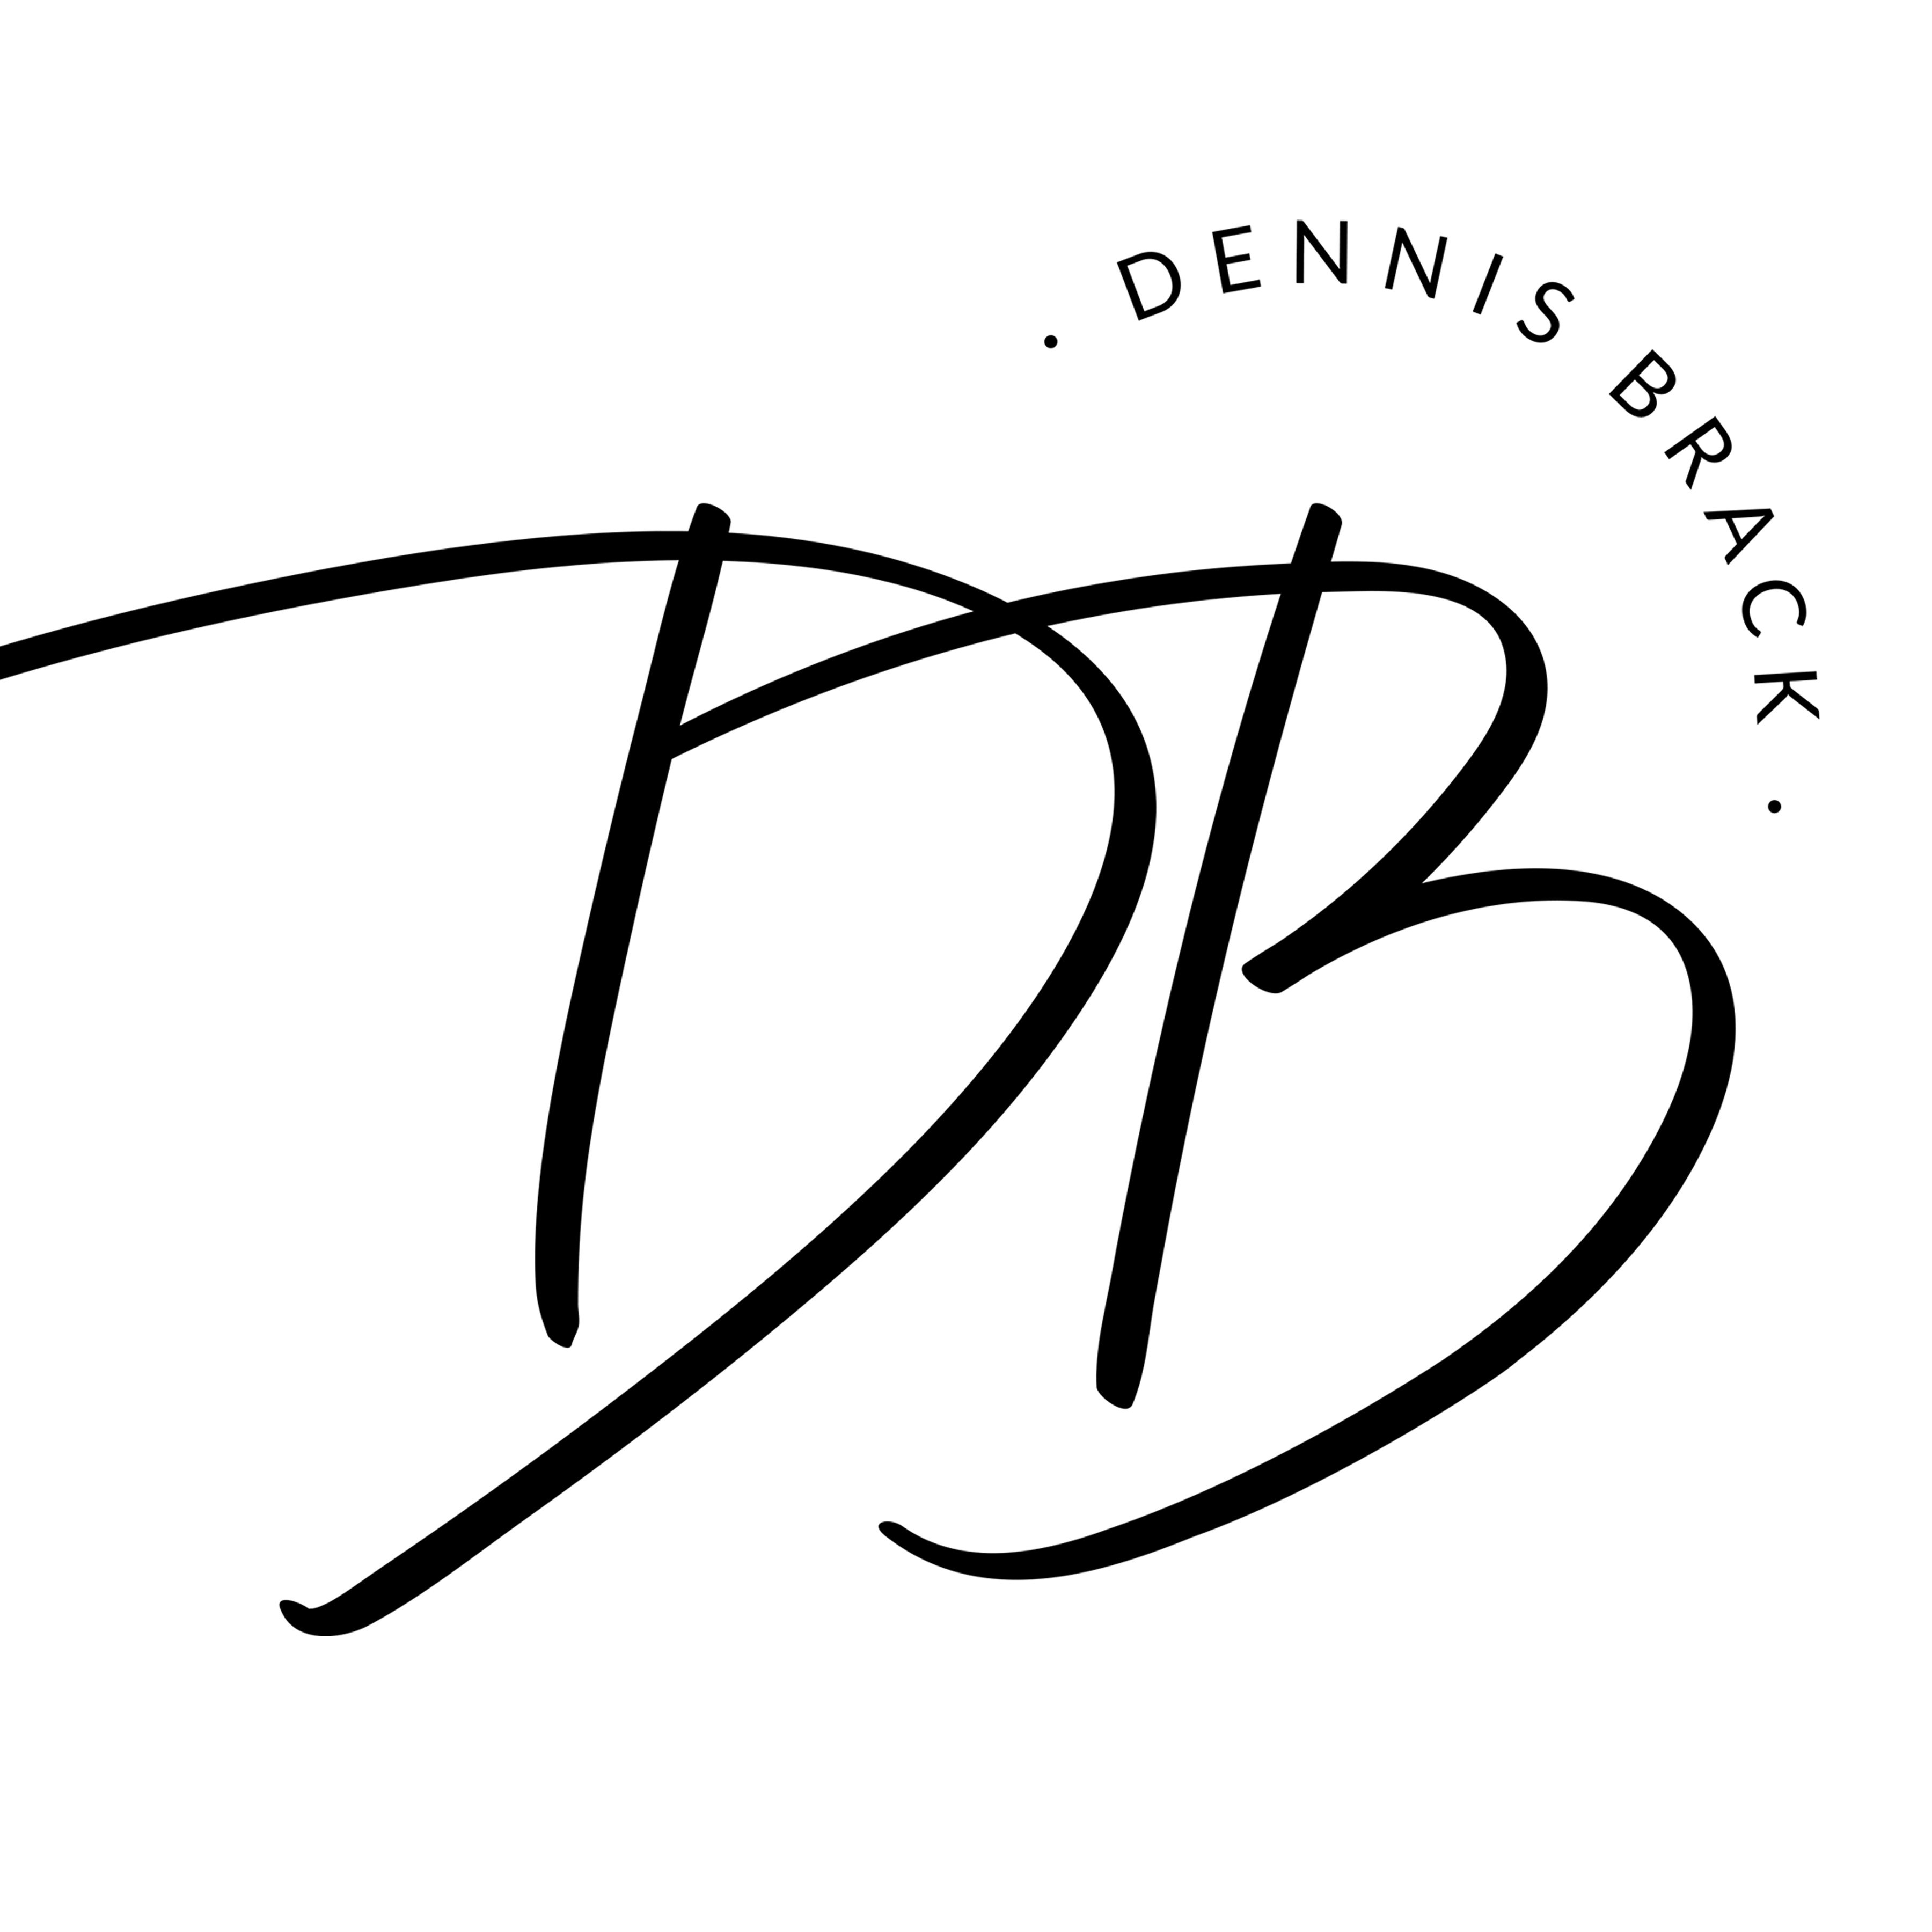 Dennis Brack Gallery